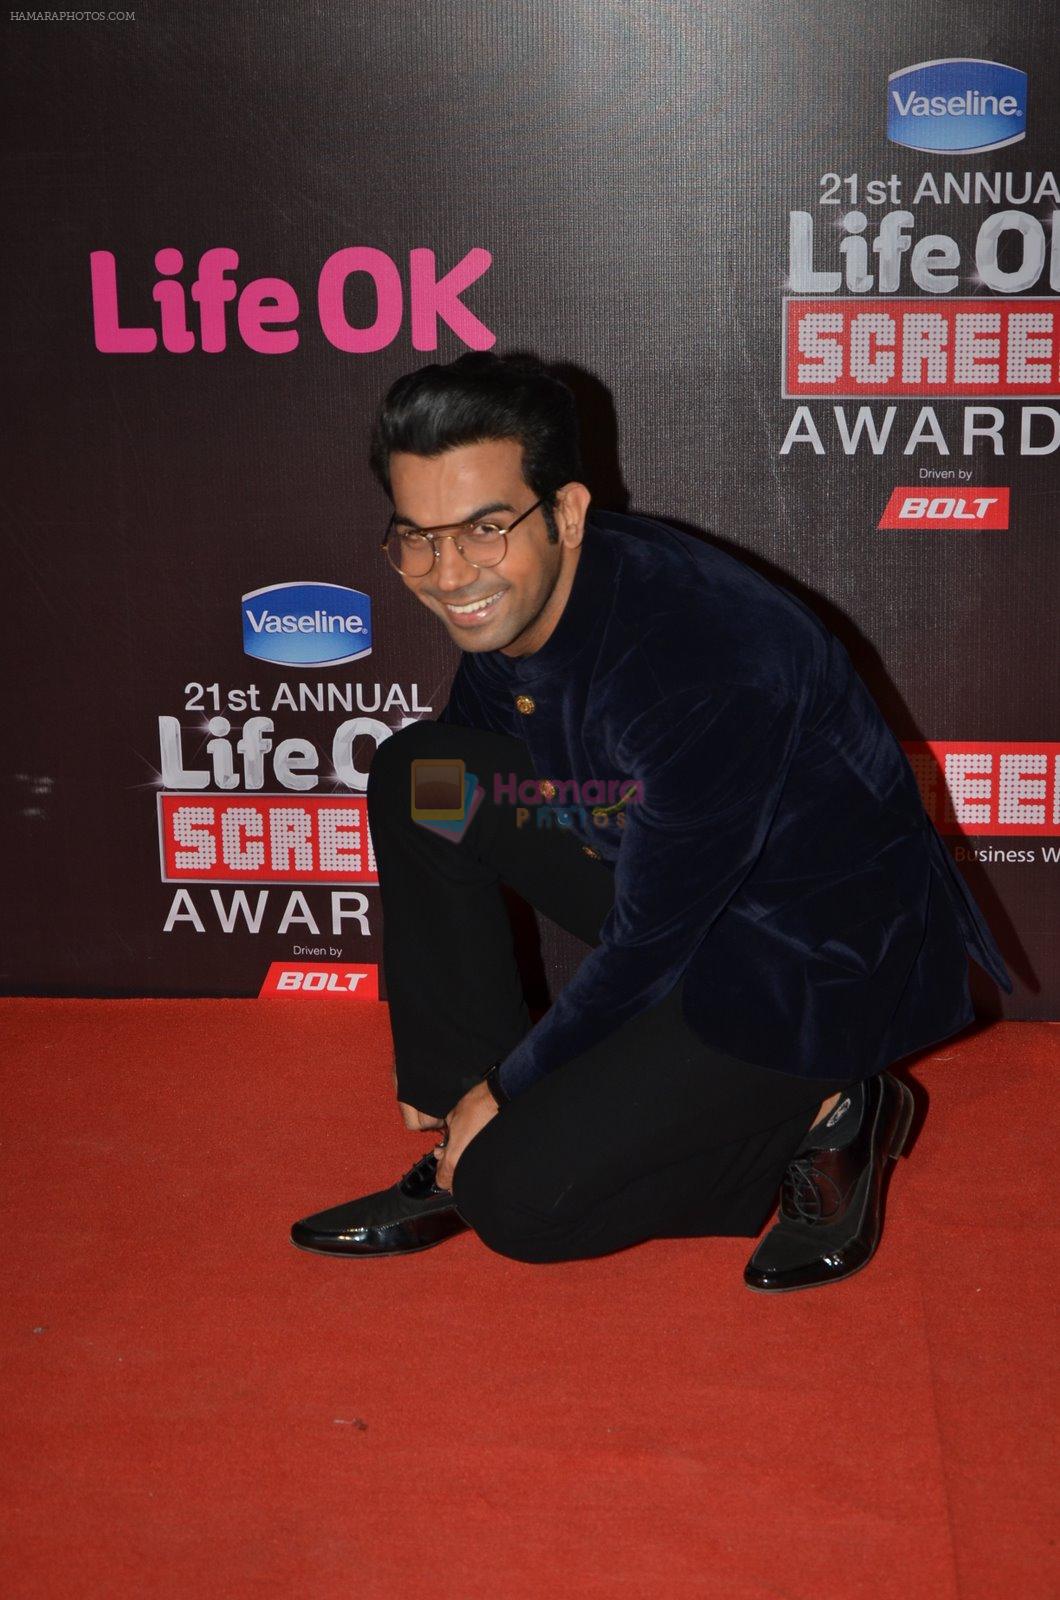 Raj Kumar Yadav at Life Ok Screen Awards red carpet in Mumbai on 14th Jan 2015